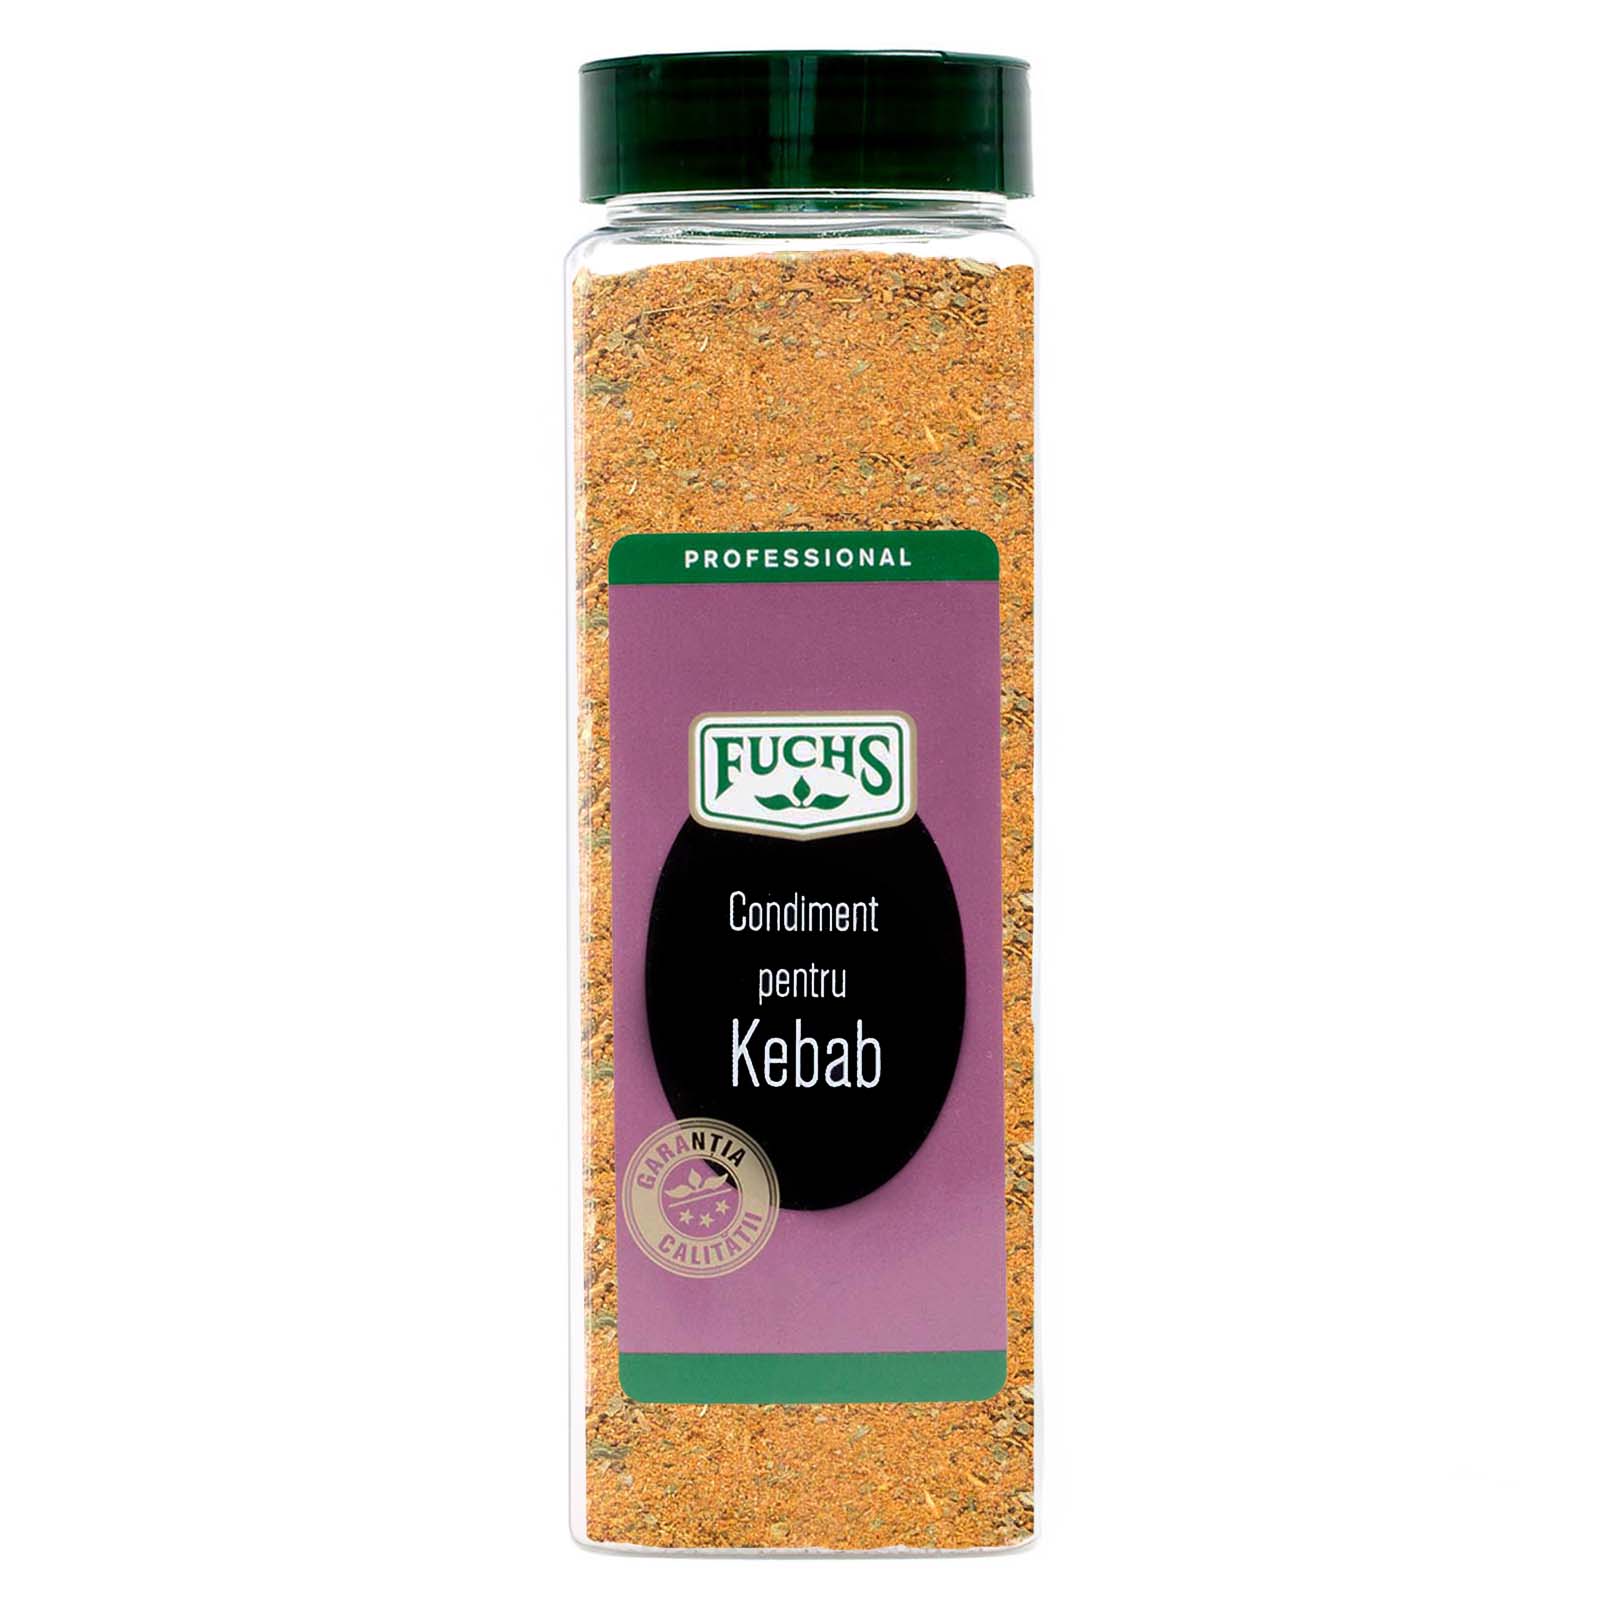 Condimente pentru kebab, Fuchs, 550g